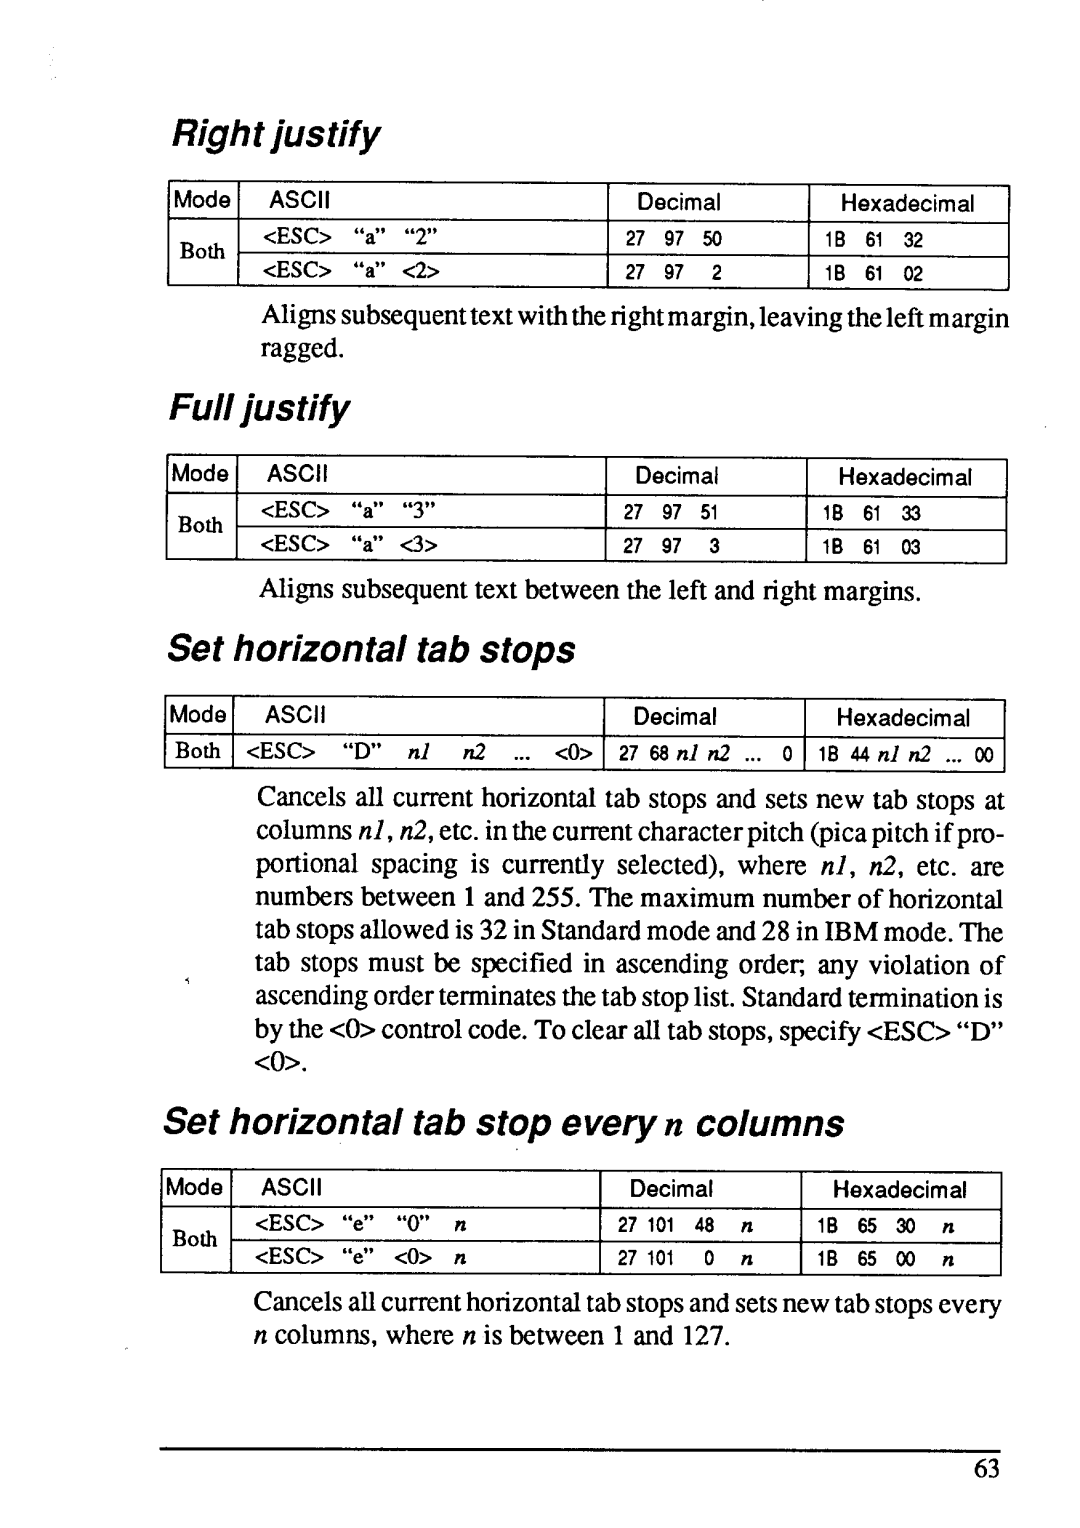 Star Micronics LC24-15 Right justify, Full justify, Set horizontal tab stops, Set horizontal tab stop everyn columns 